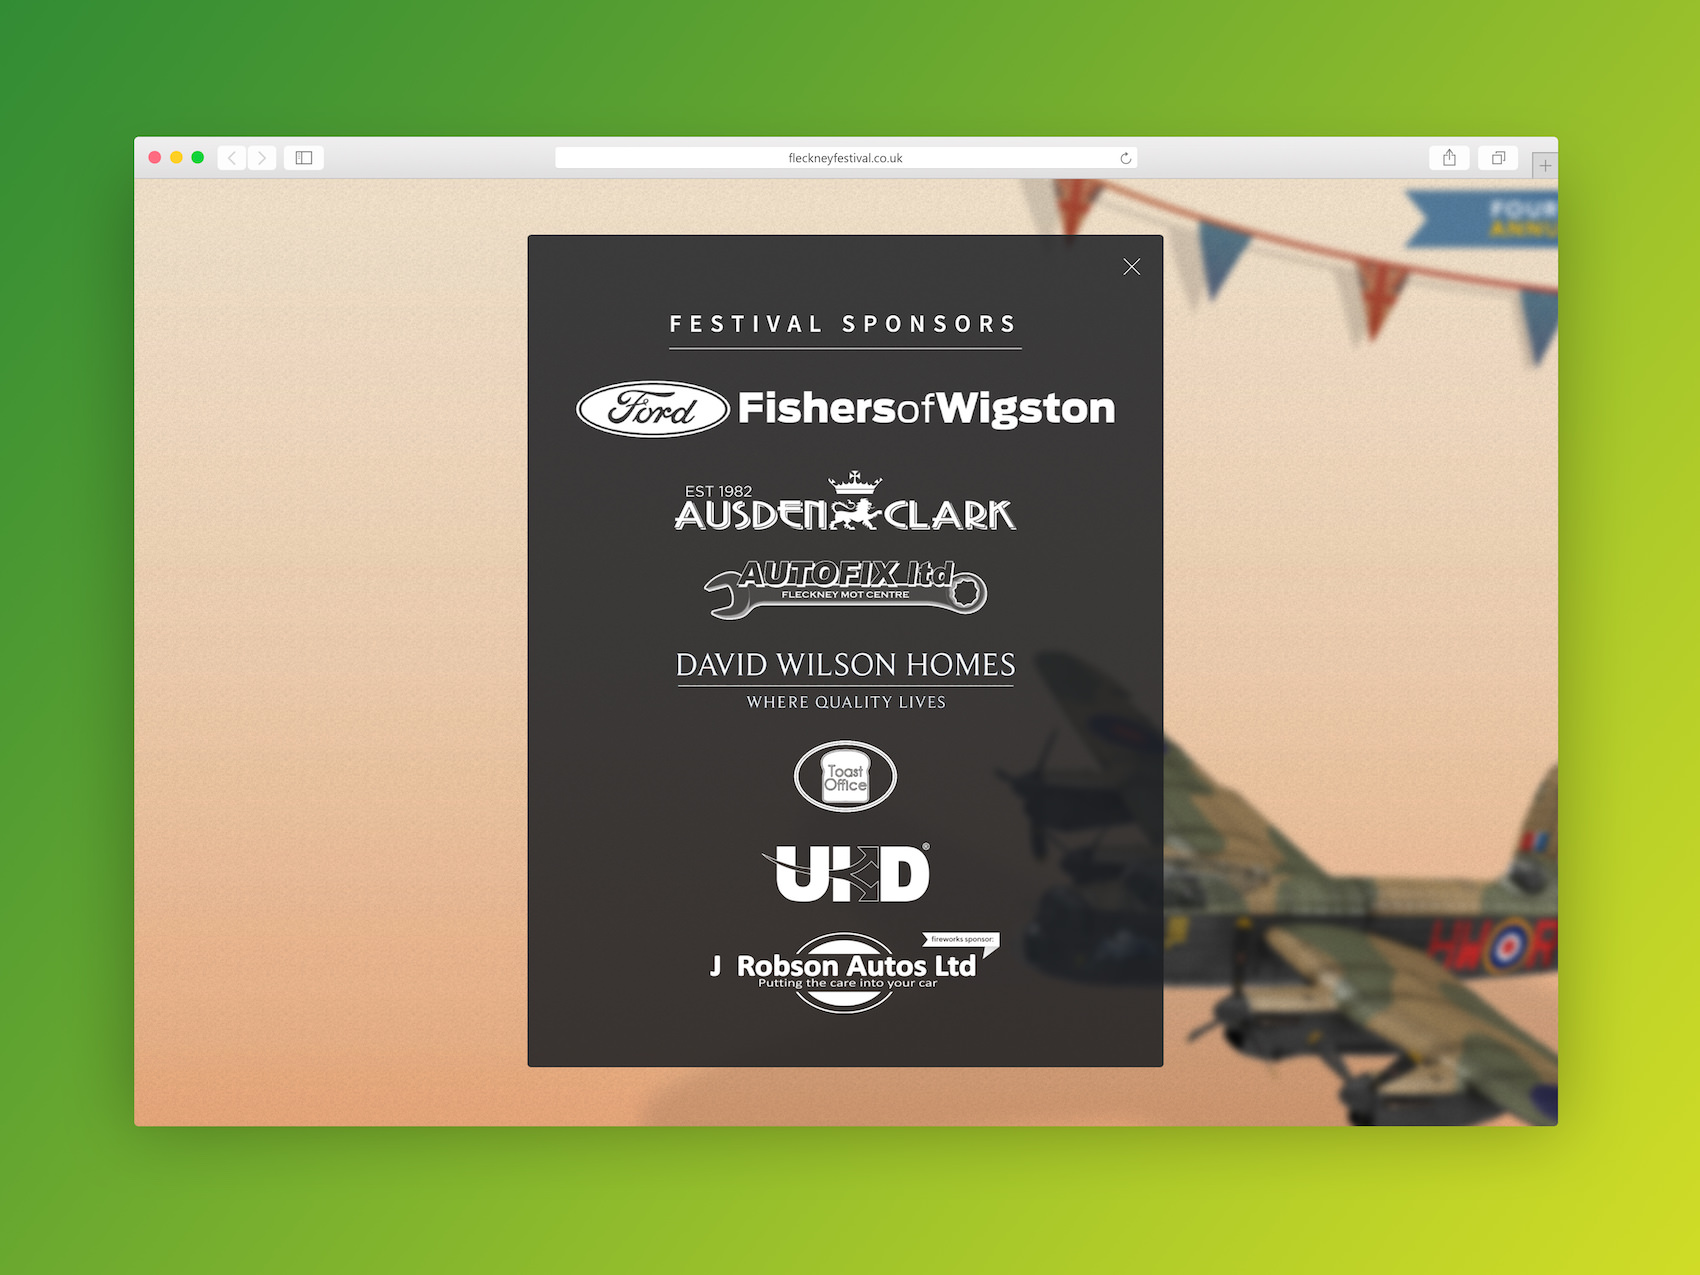 Fleckney Festival – Website Web Design